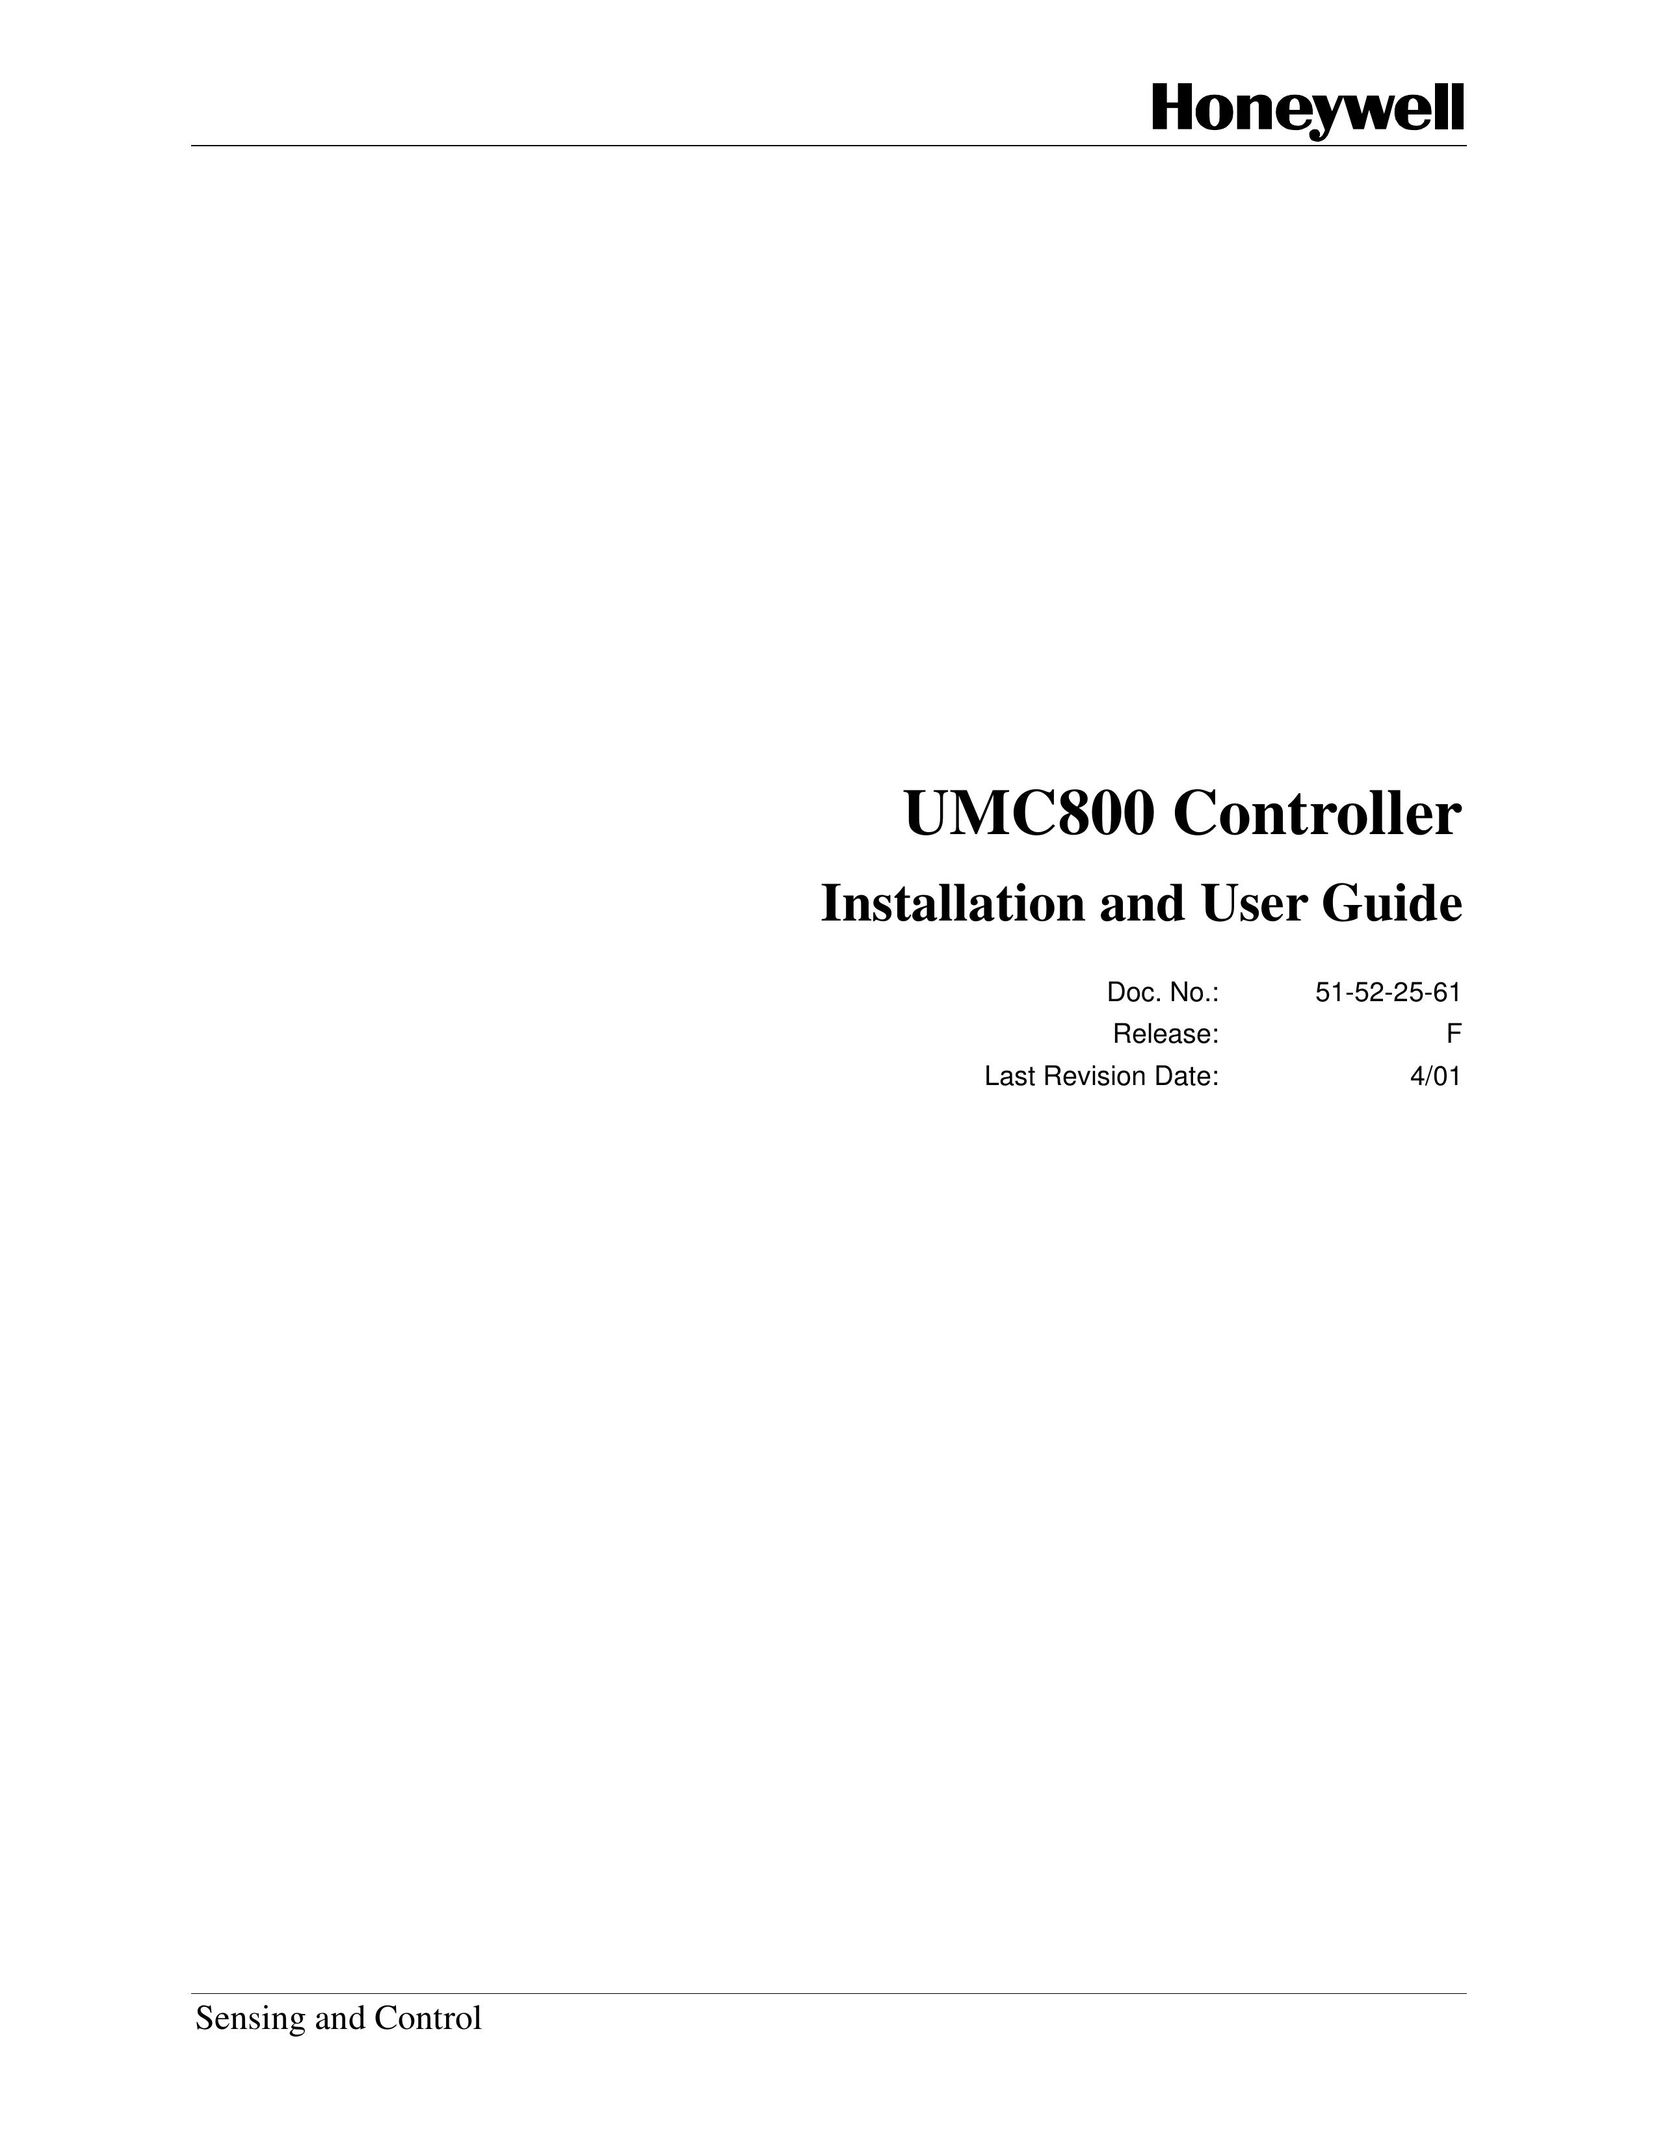 Honeywell UMC800 Network Card User Manual